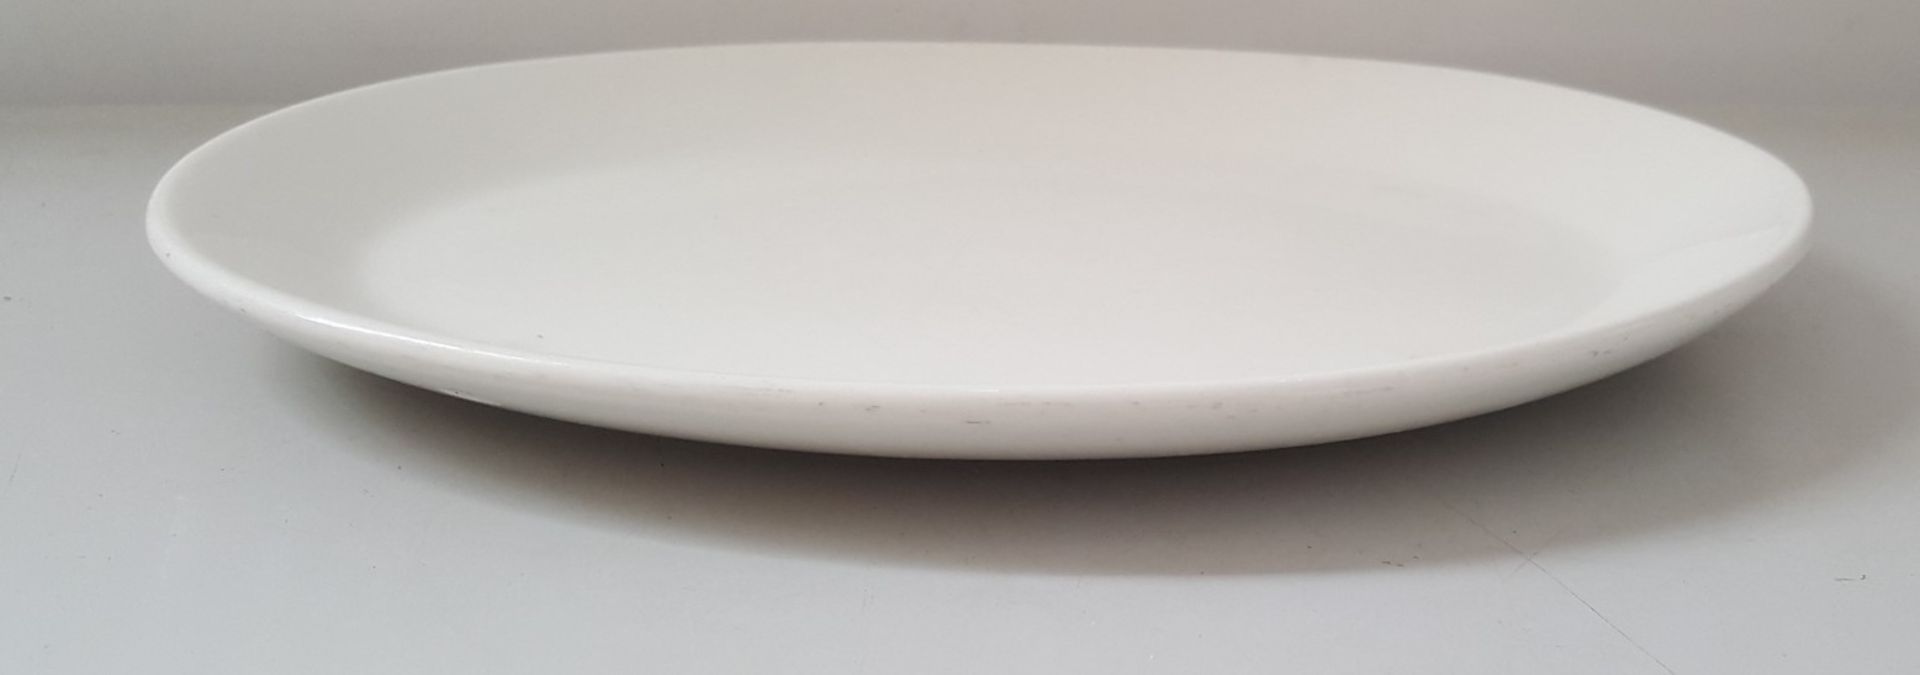 14 x Steelite Oval Serving Plates White L28/W21.5CM - Ref CQ273 - Image 3 of 4